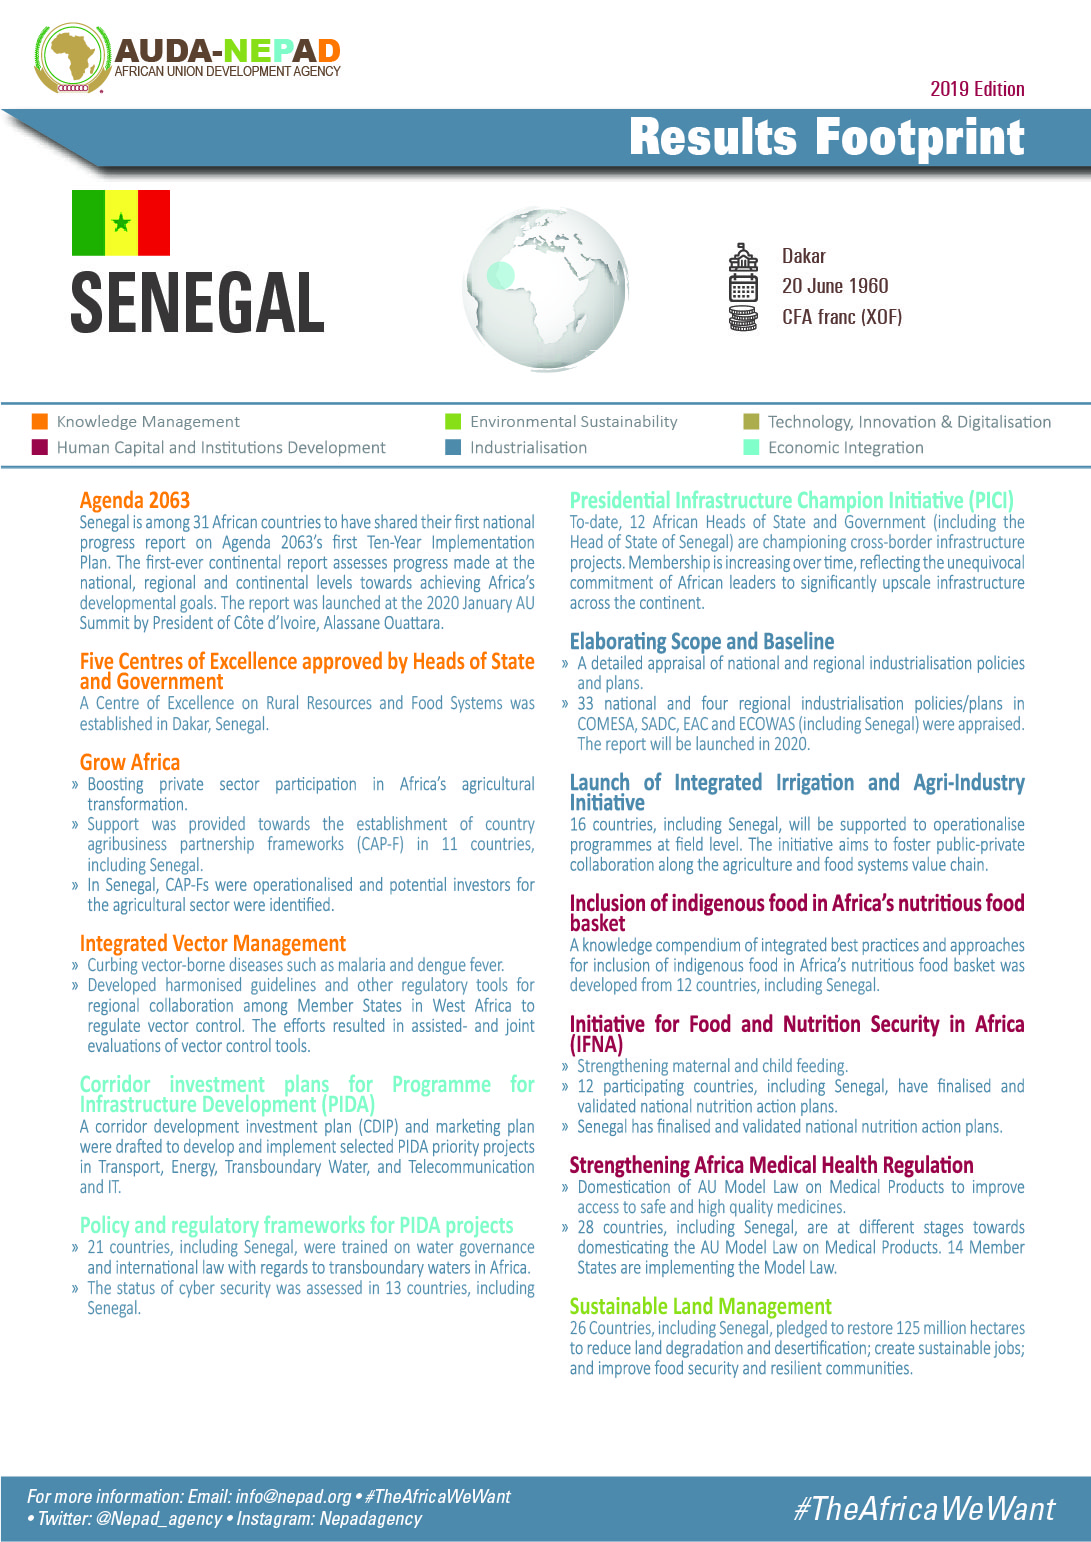 2019 AUDA-NEPAD Footprint: Country Profiles: Senegal